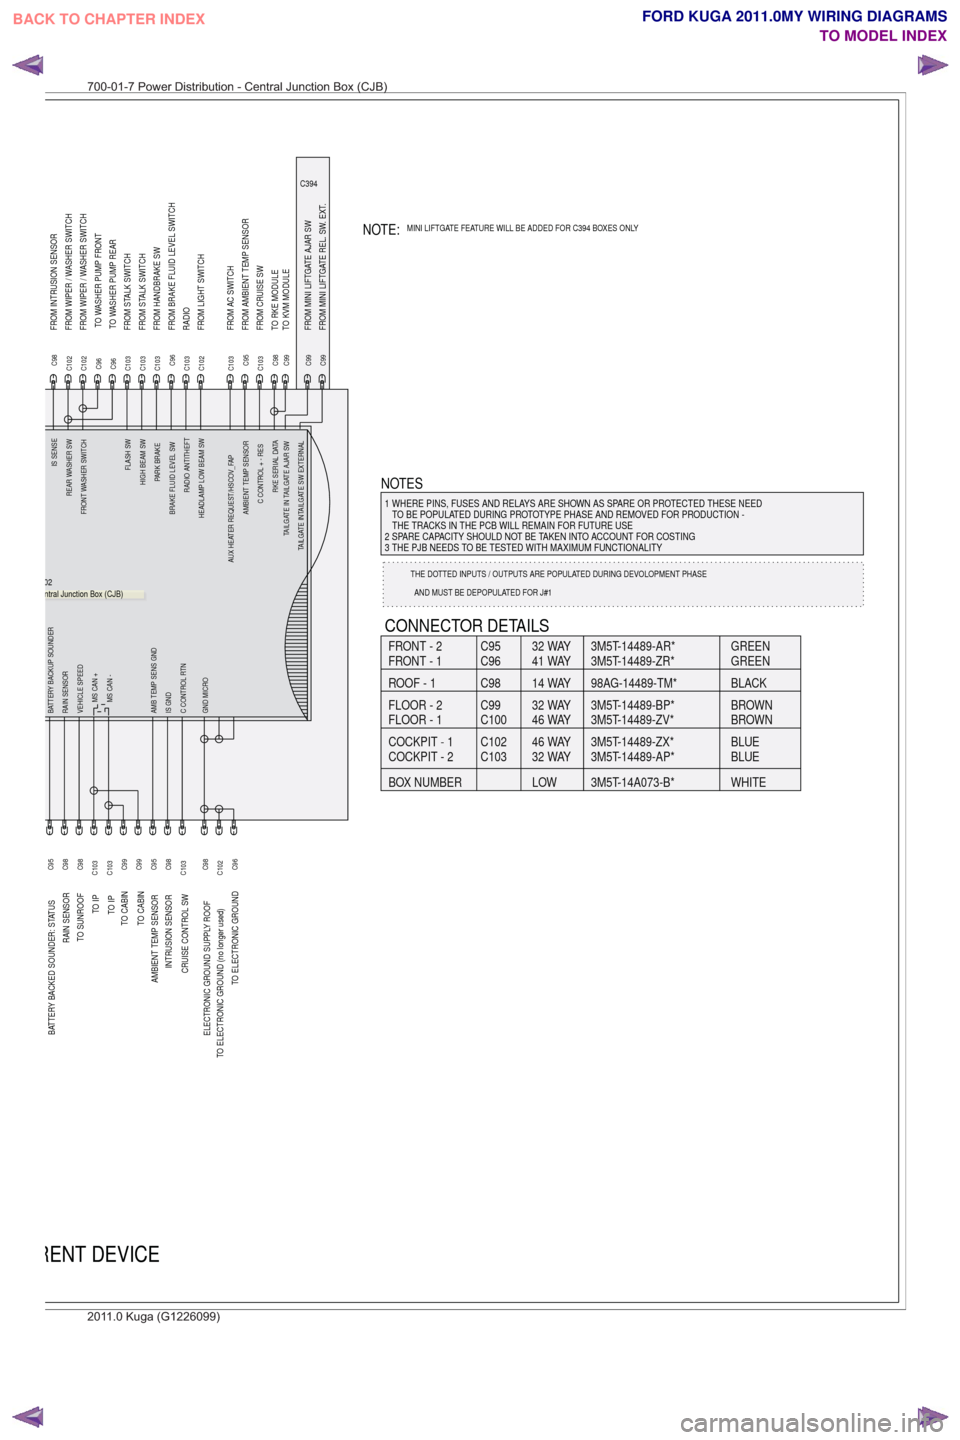 FORD KUGA 2011 1.G Wiring Diagram User Guide C394
TO ELECTRONIC GROUND (no longer used)BATTERY BACKED SOUNDER: STATUS
RAIN SENSORTO SUNROOF
AMBIENT TEMP SENSOR INTRUSION SENSOR
CRUISE CONTROL SW
ELECTRONIC GROUND SUPPLY ROOF
TO ELECTRONIC GROUND